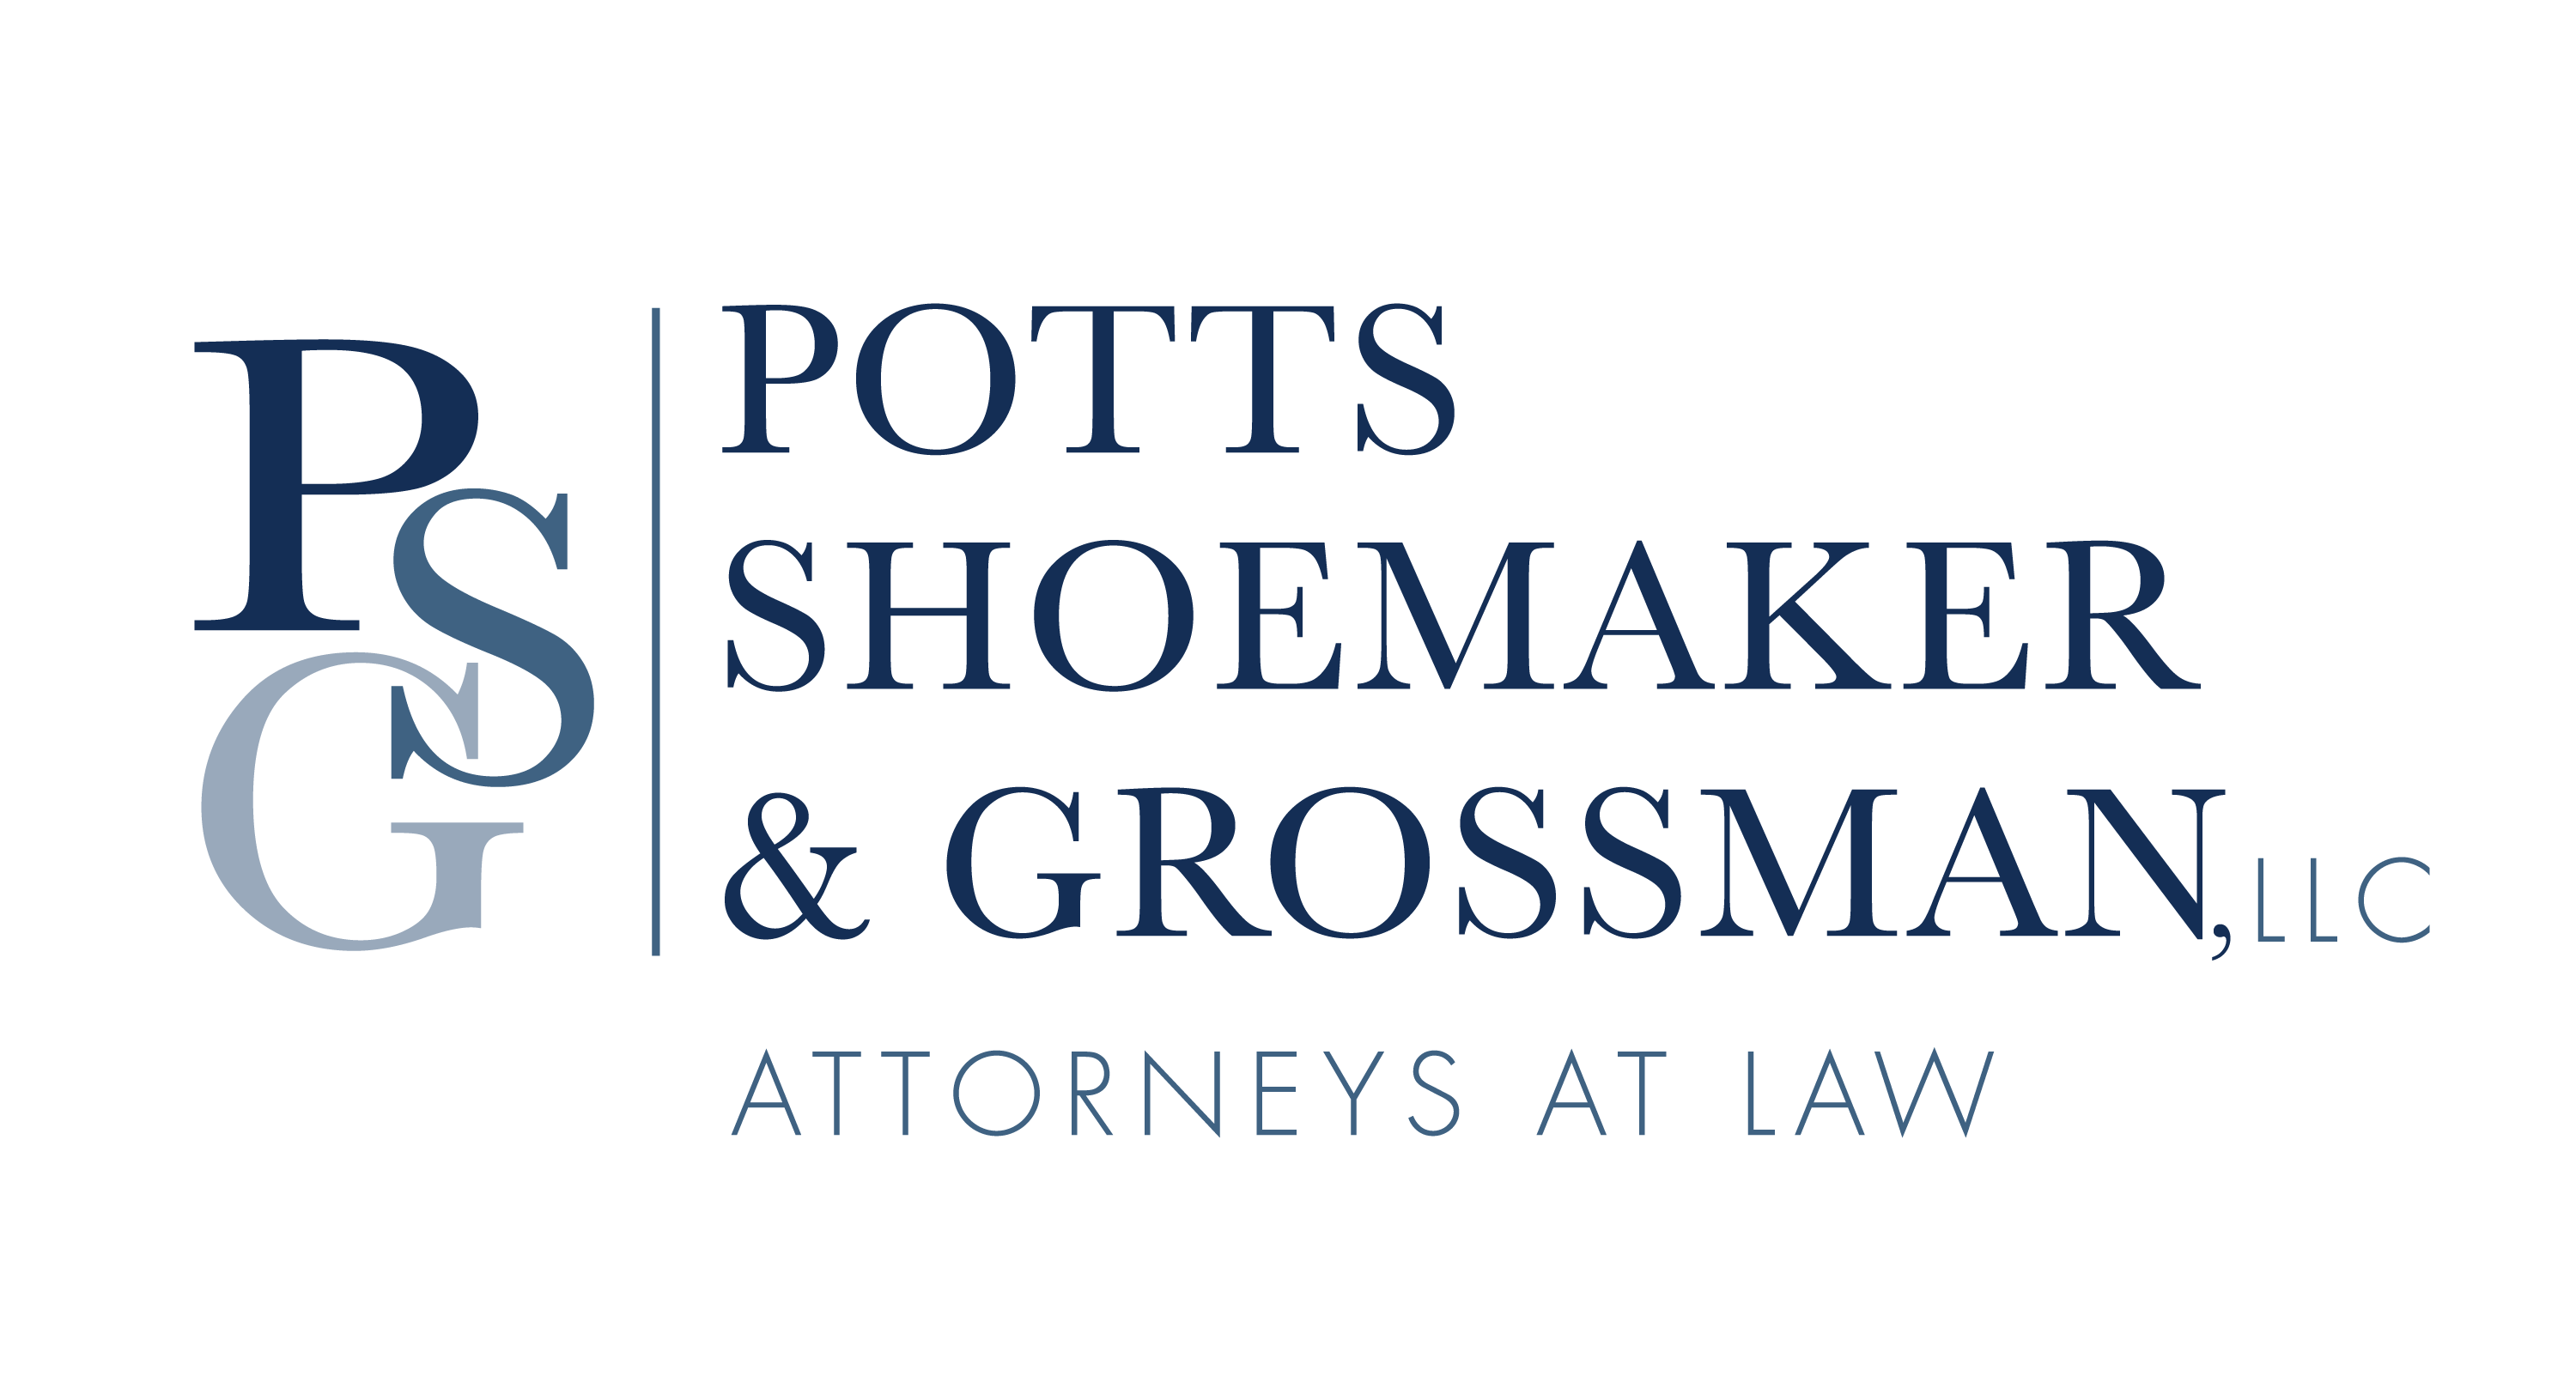 Potts, Shoemaker & Grossman, LLC